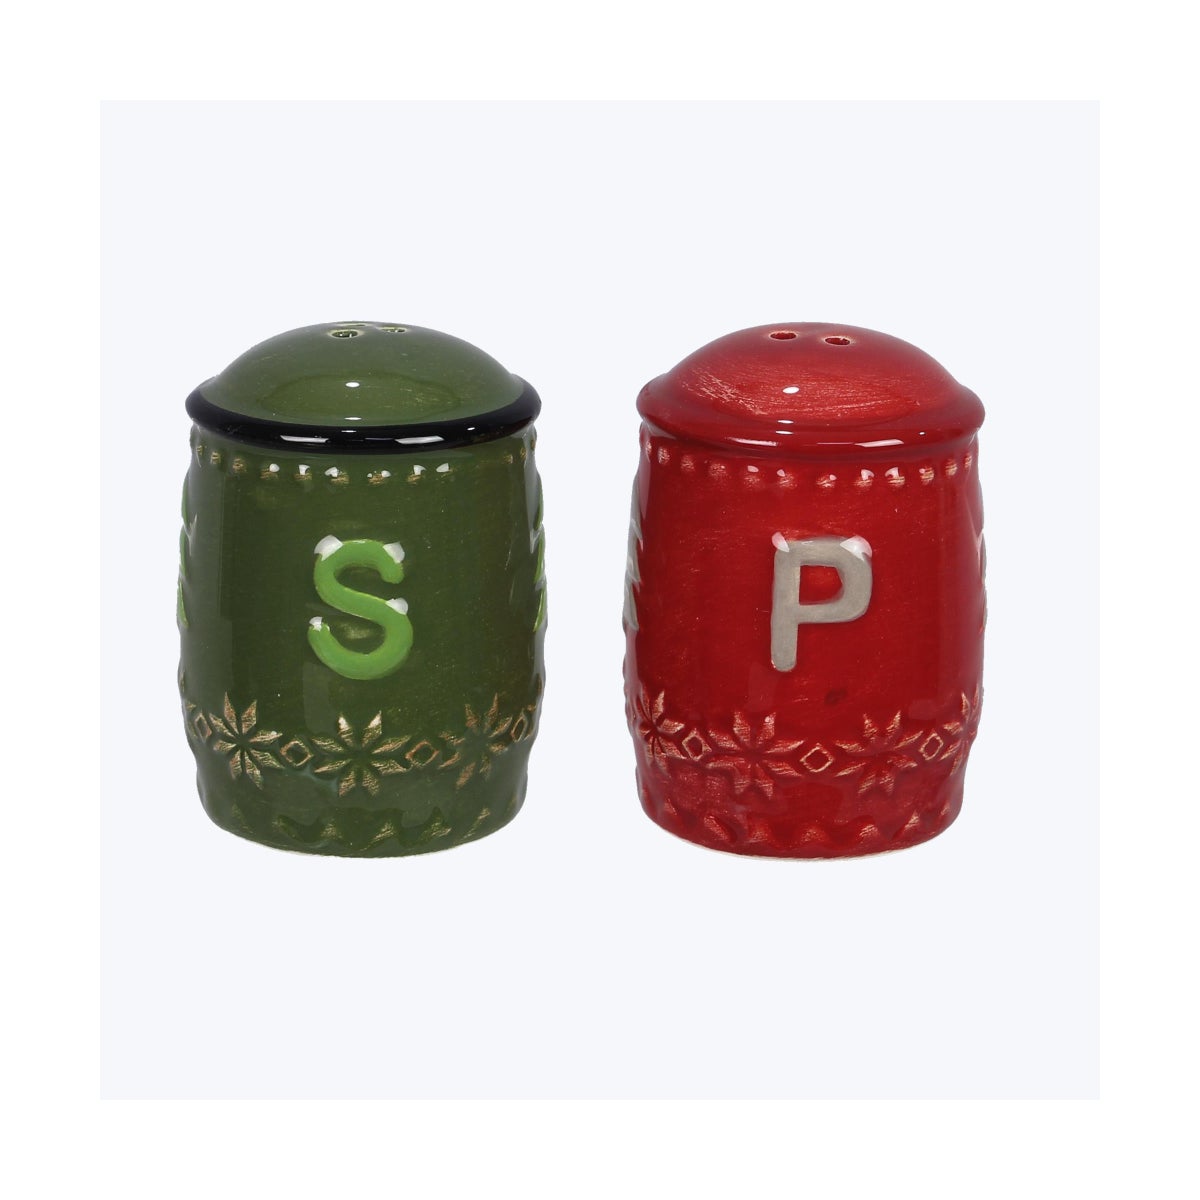 Ceramic Woodland Lodge Salt and Pepper Set of 2, S/P